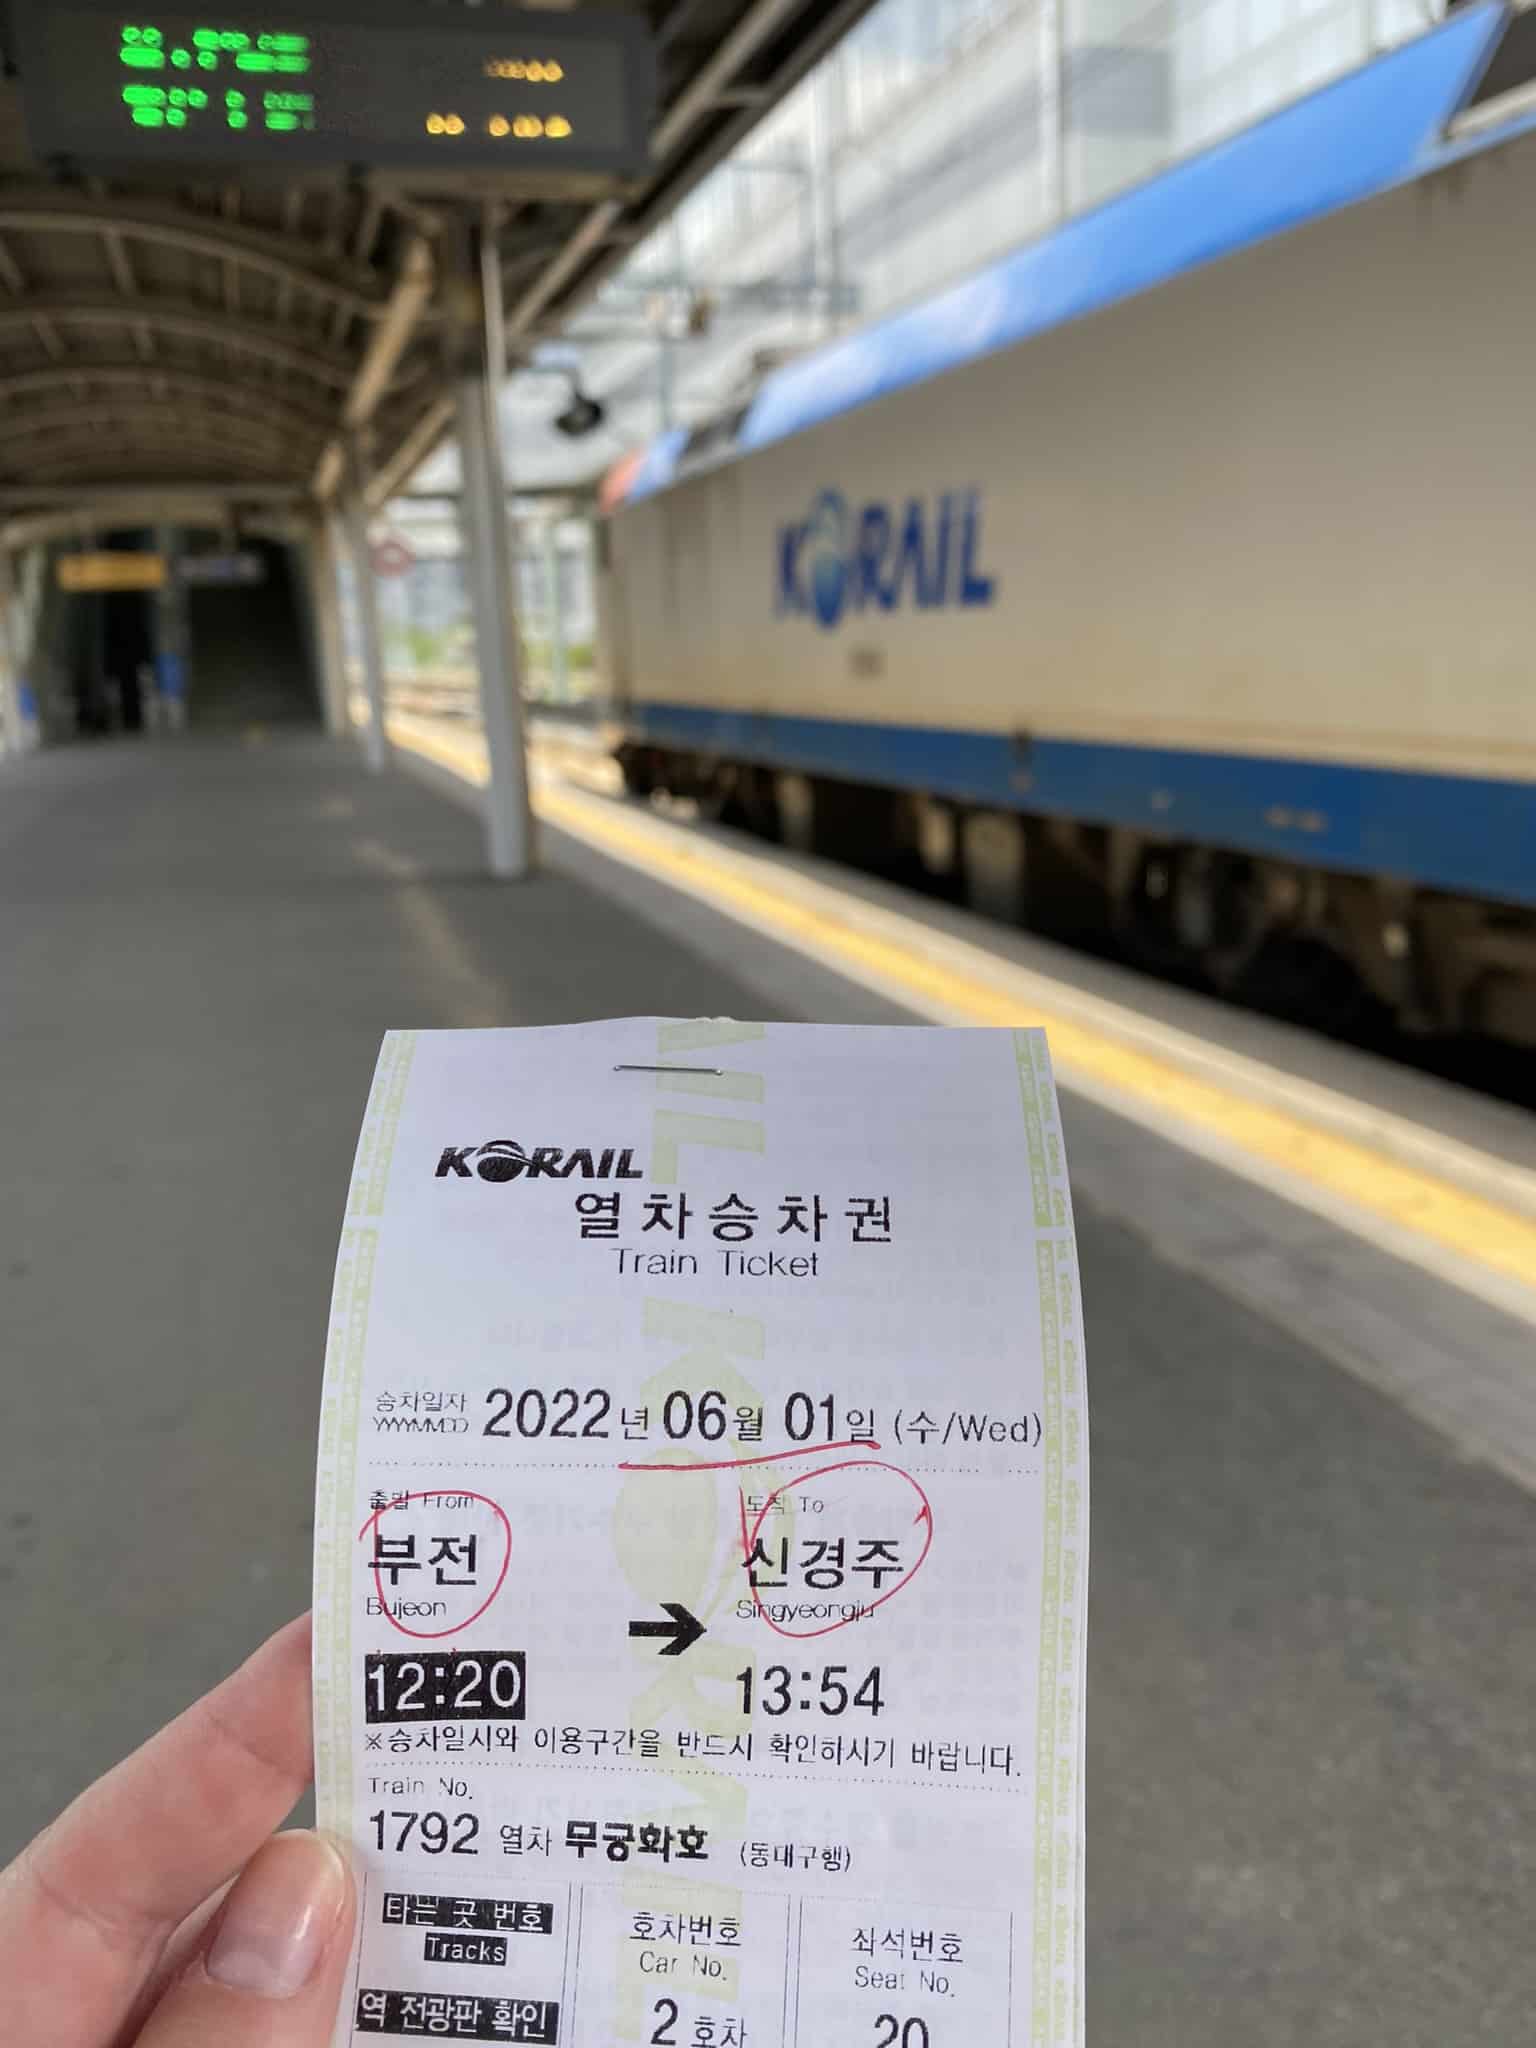 Korail is grootste aanbieder in treinen in Zuid Korea